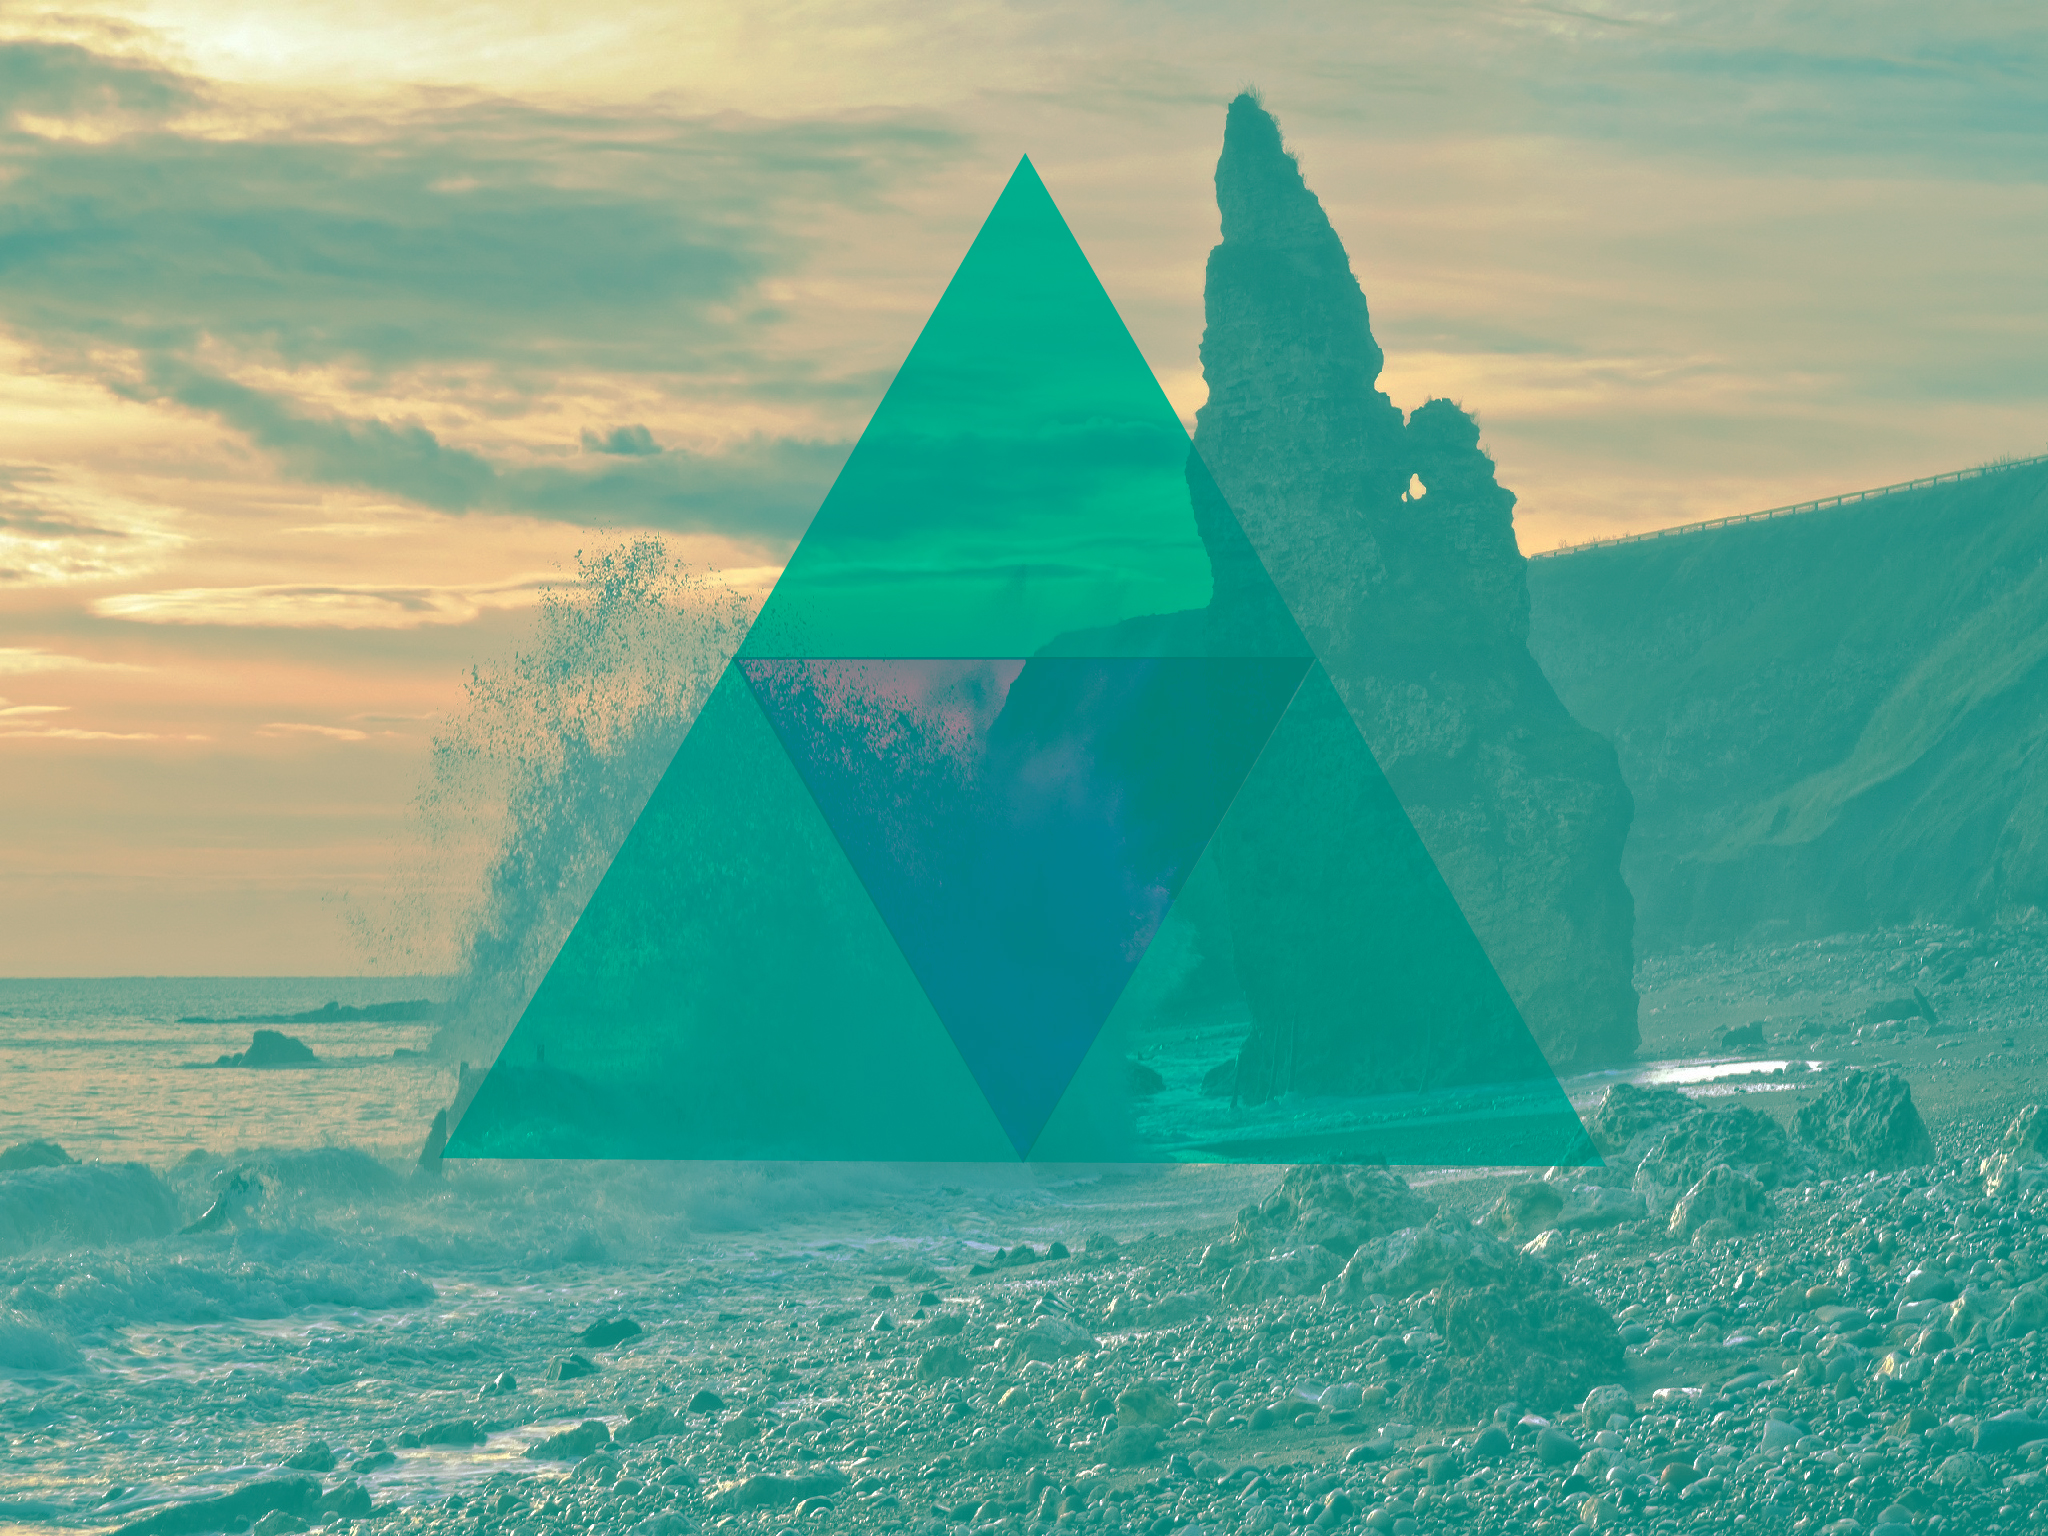 General 2048x1536 triangle minimalism beach rocks landscape sea bay digital art